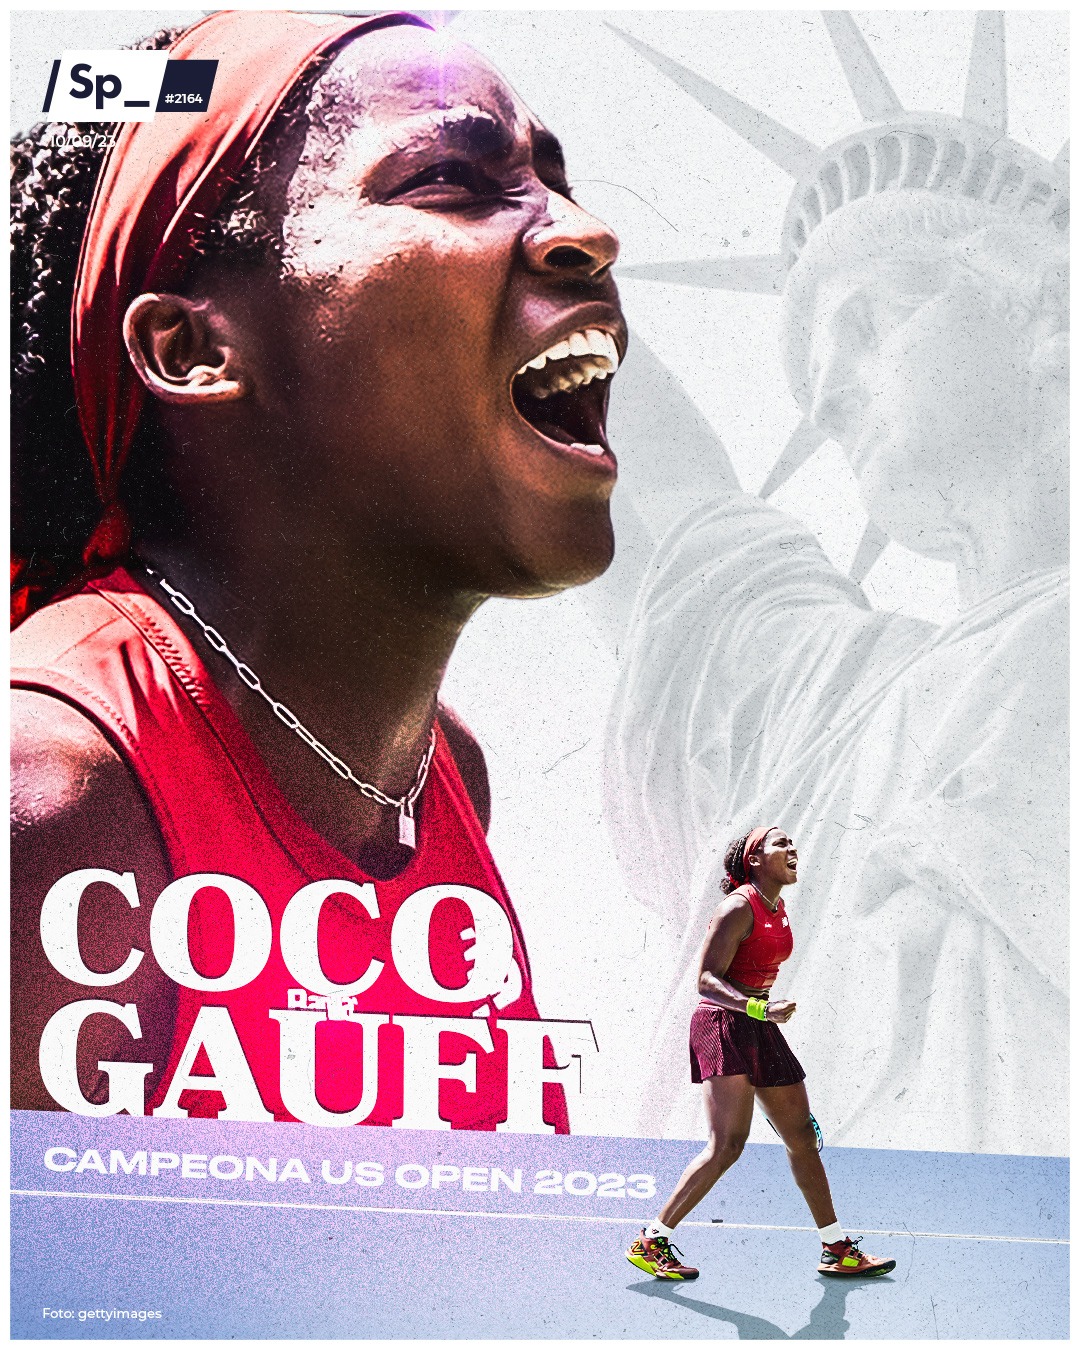 Coco Gauff, campeona US Open 2023